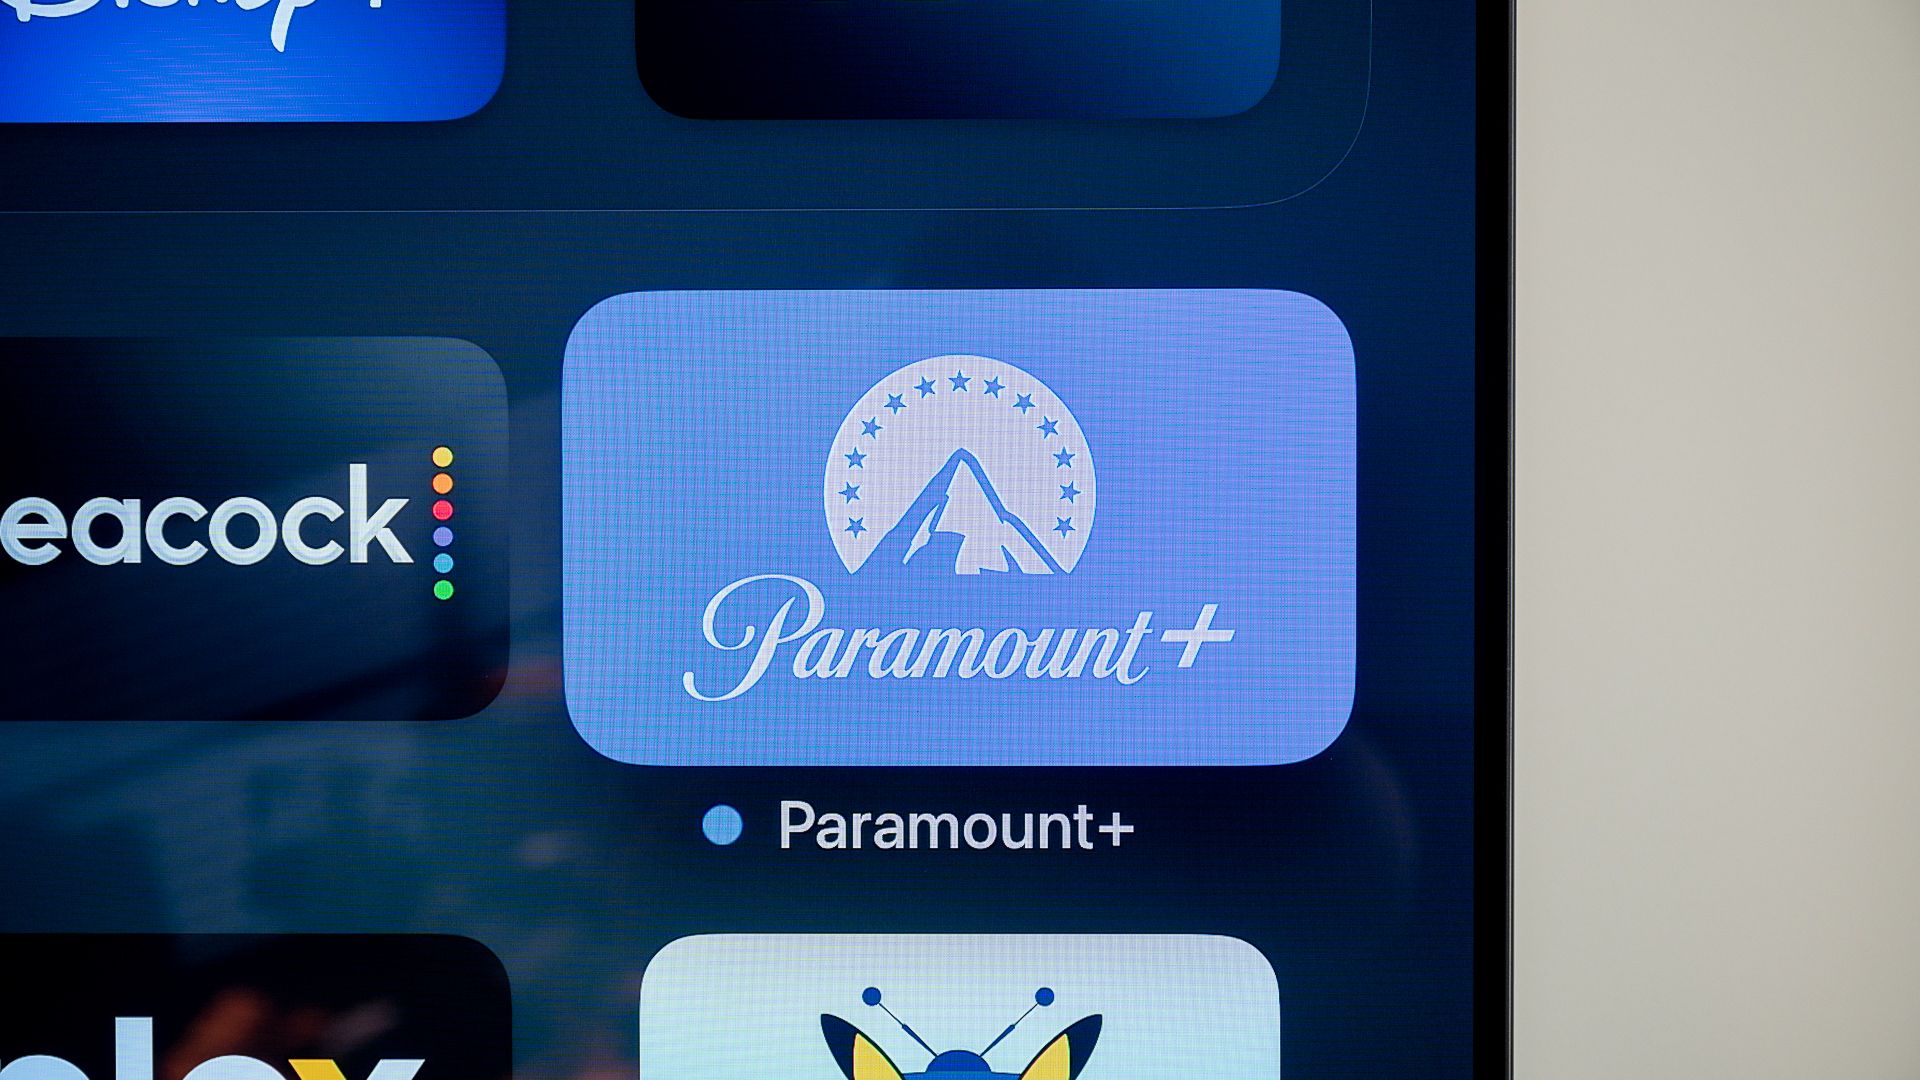 Paramount+ app icon on Apple TV.